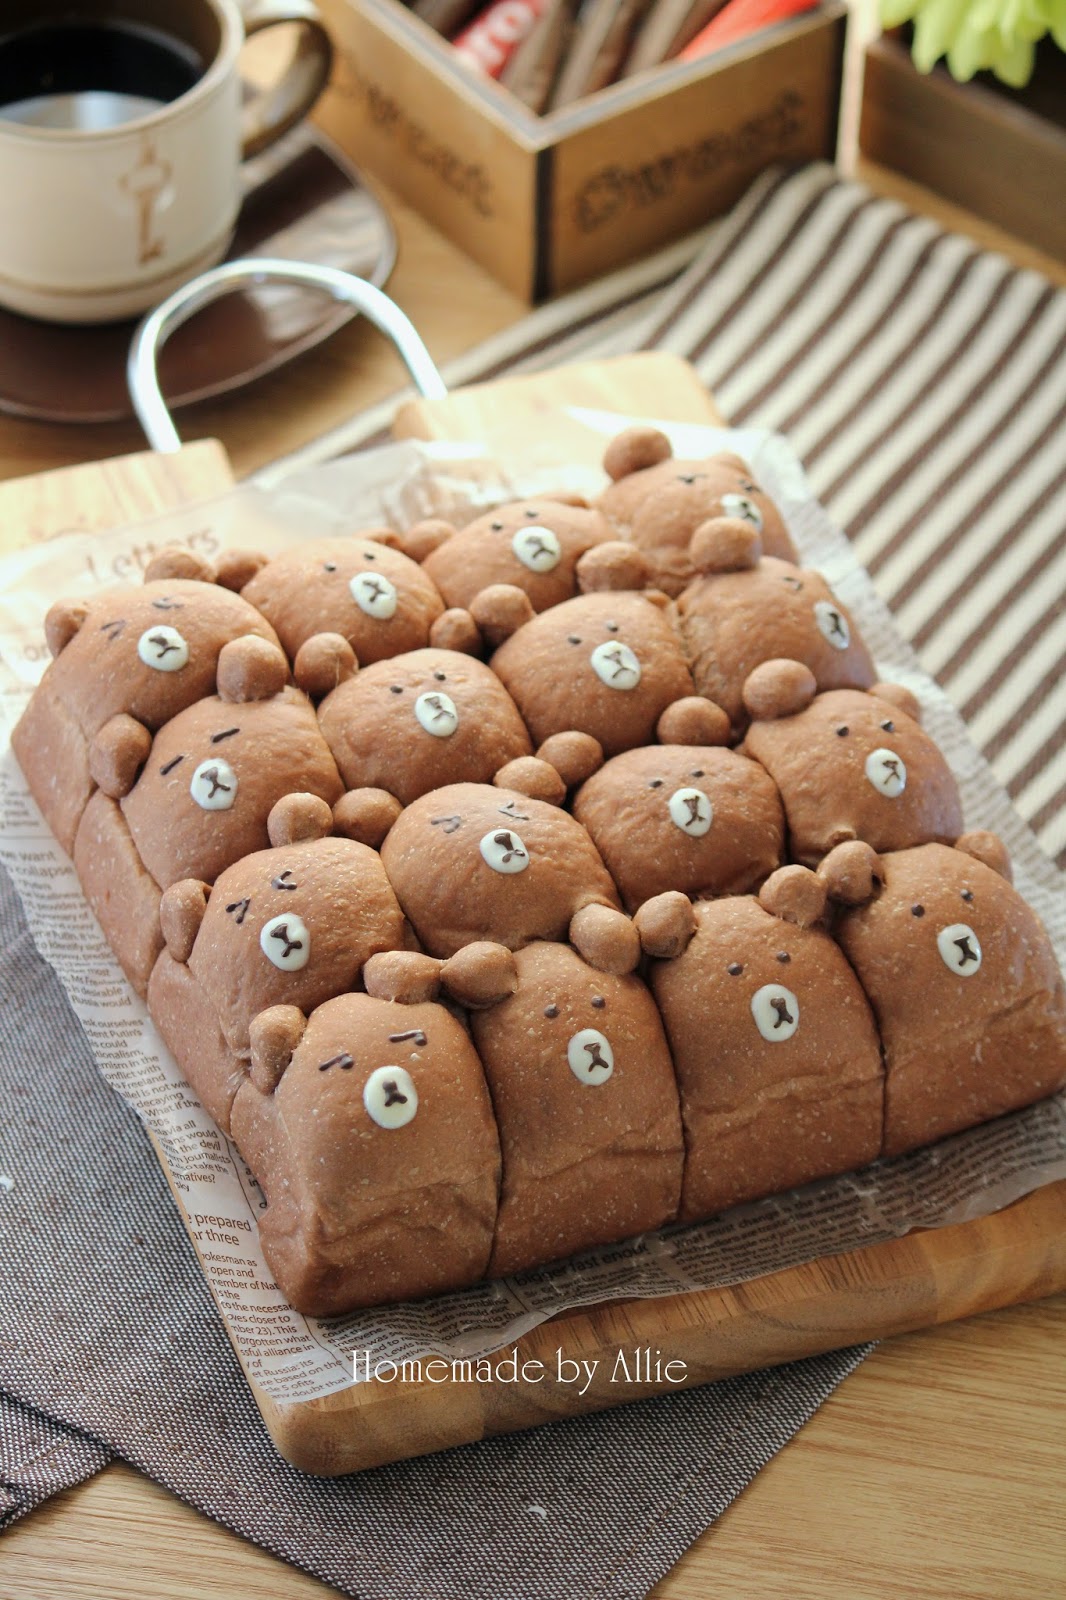 Missta's Kitchen: 可愛小熊格仔麵包 Kawaii Teddy Bear Tearing Bread